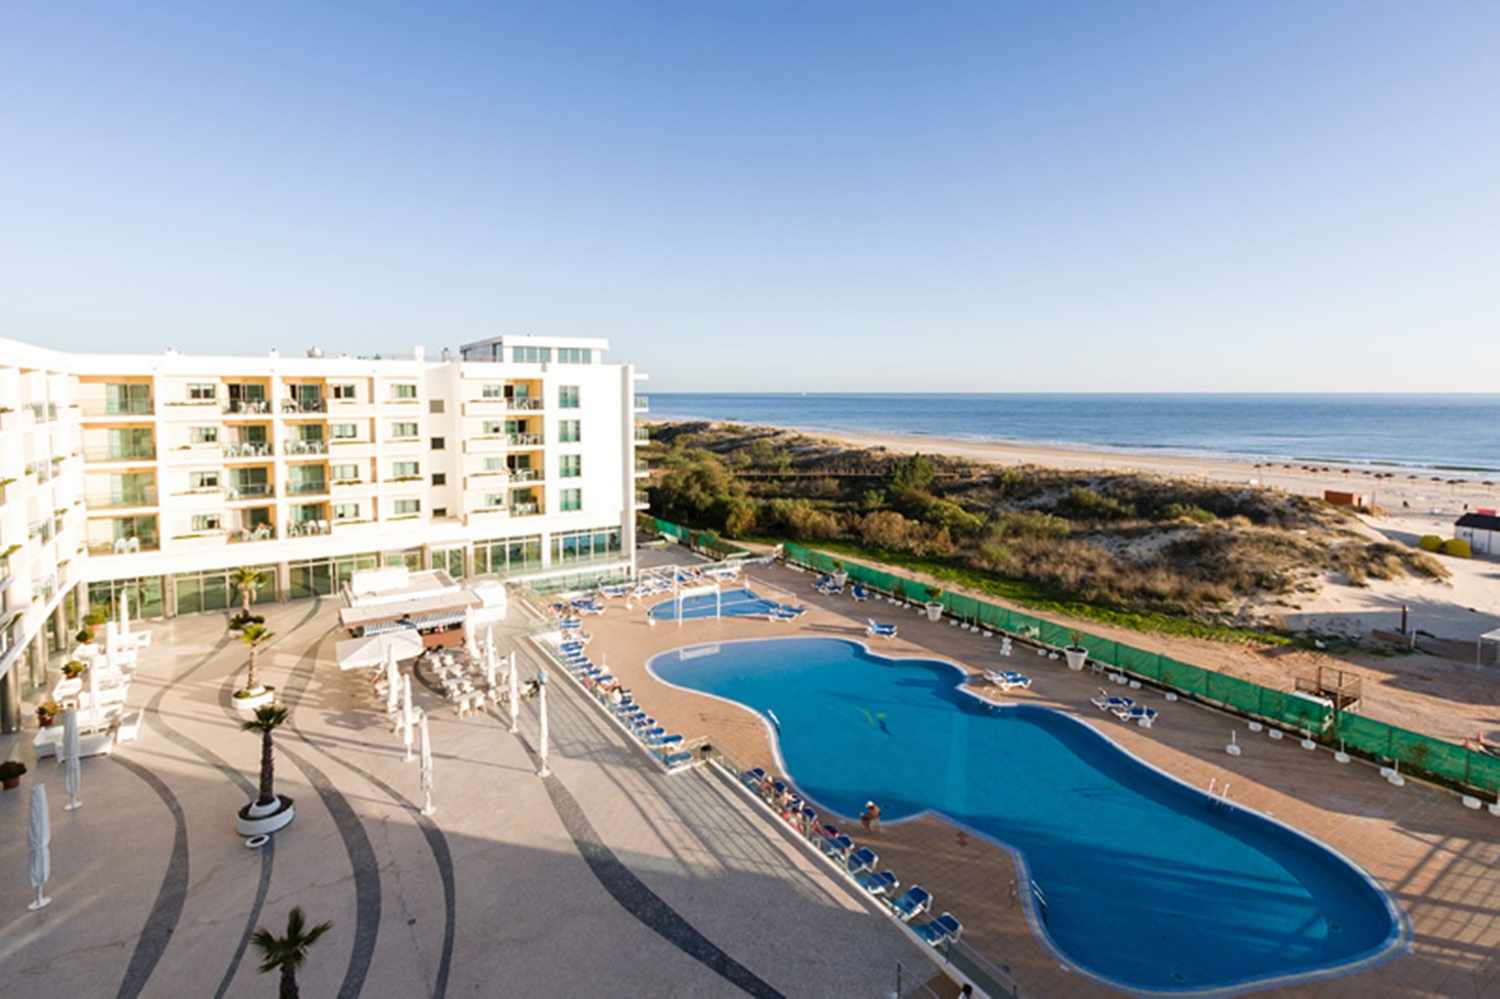 Dunamar Hotel Apartamentos, Monte Gordo, Algarve, Portugal